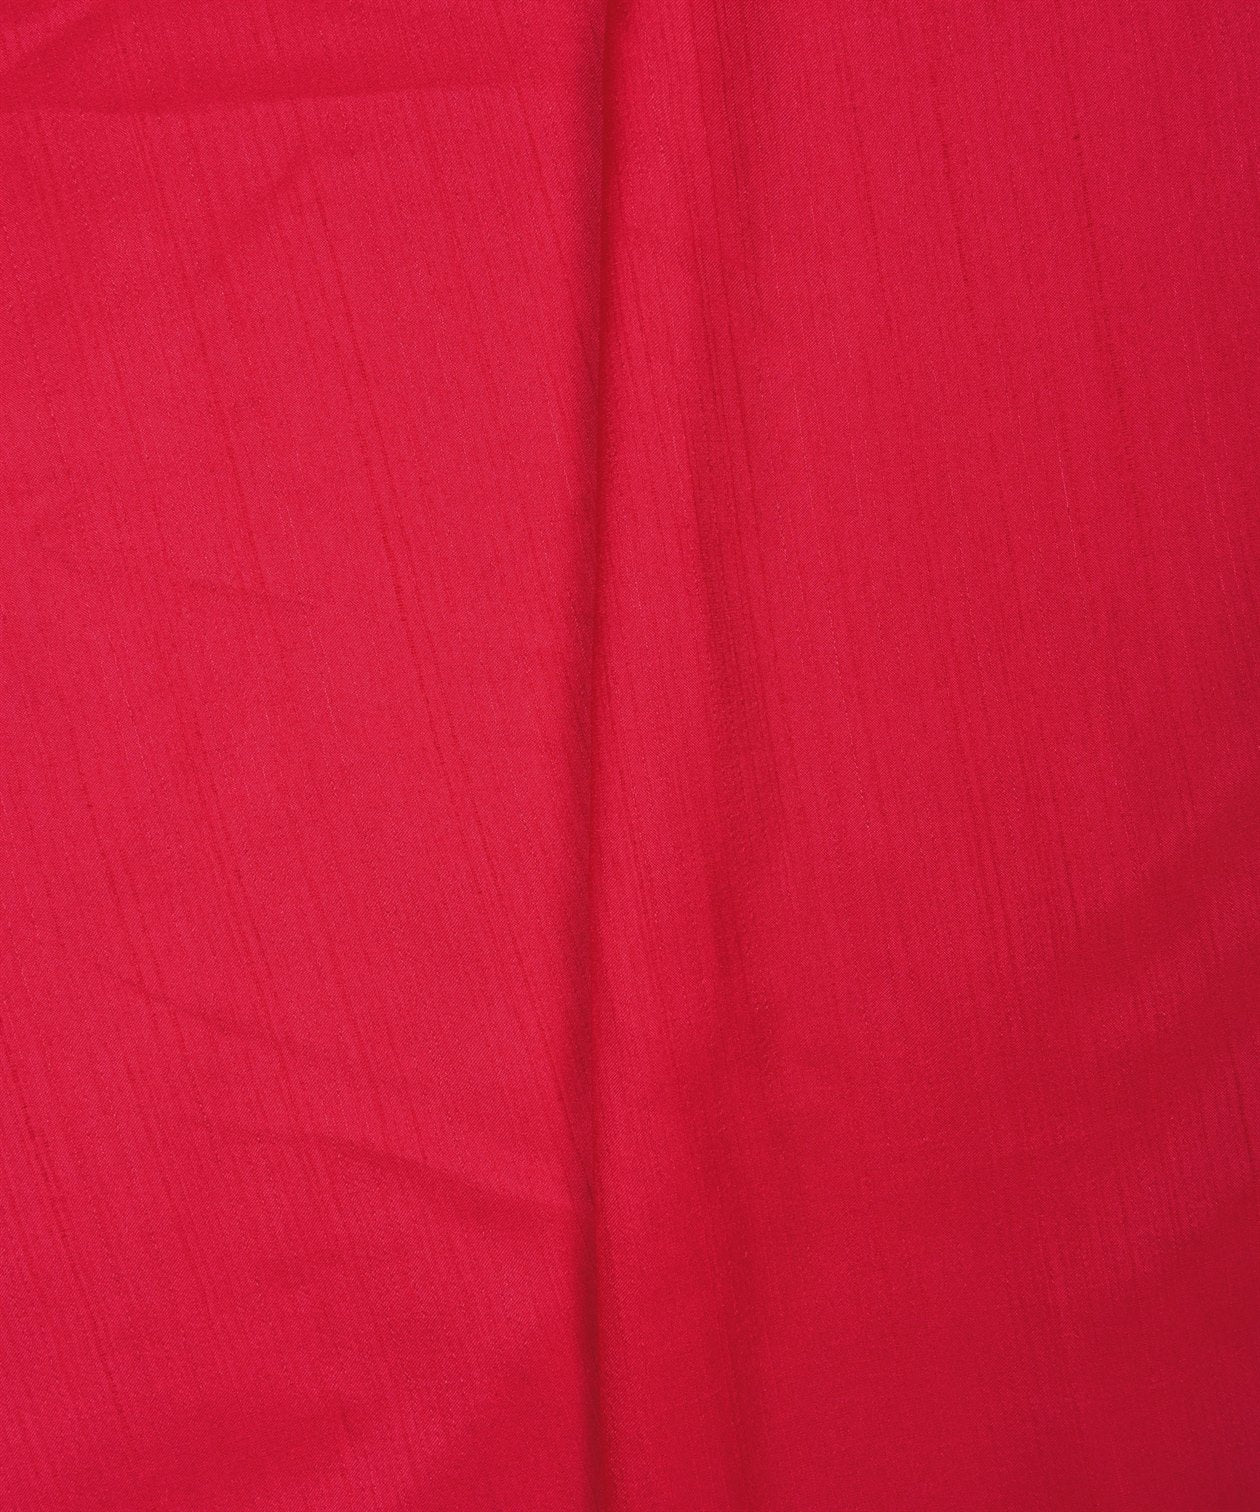 Hot Pink Plain Satin Georgette Slub Fabric